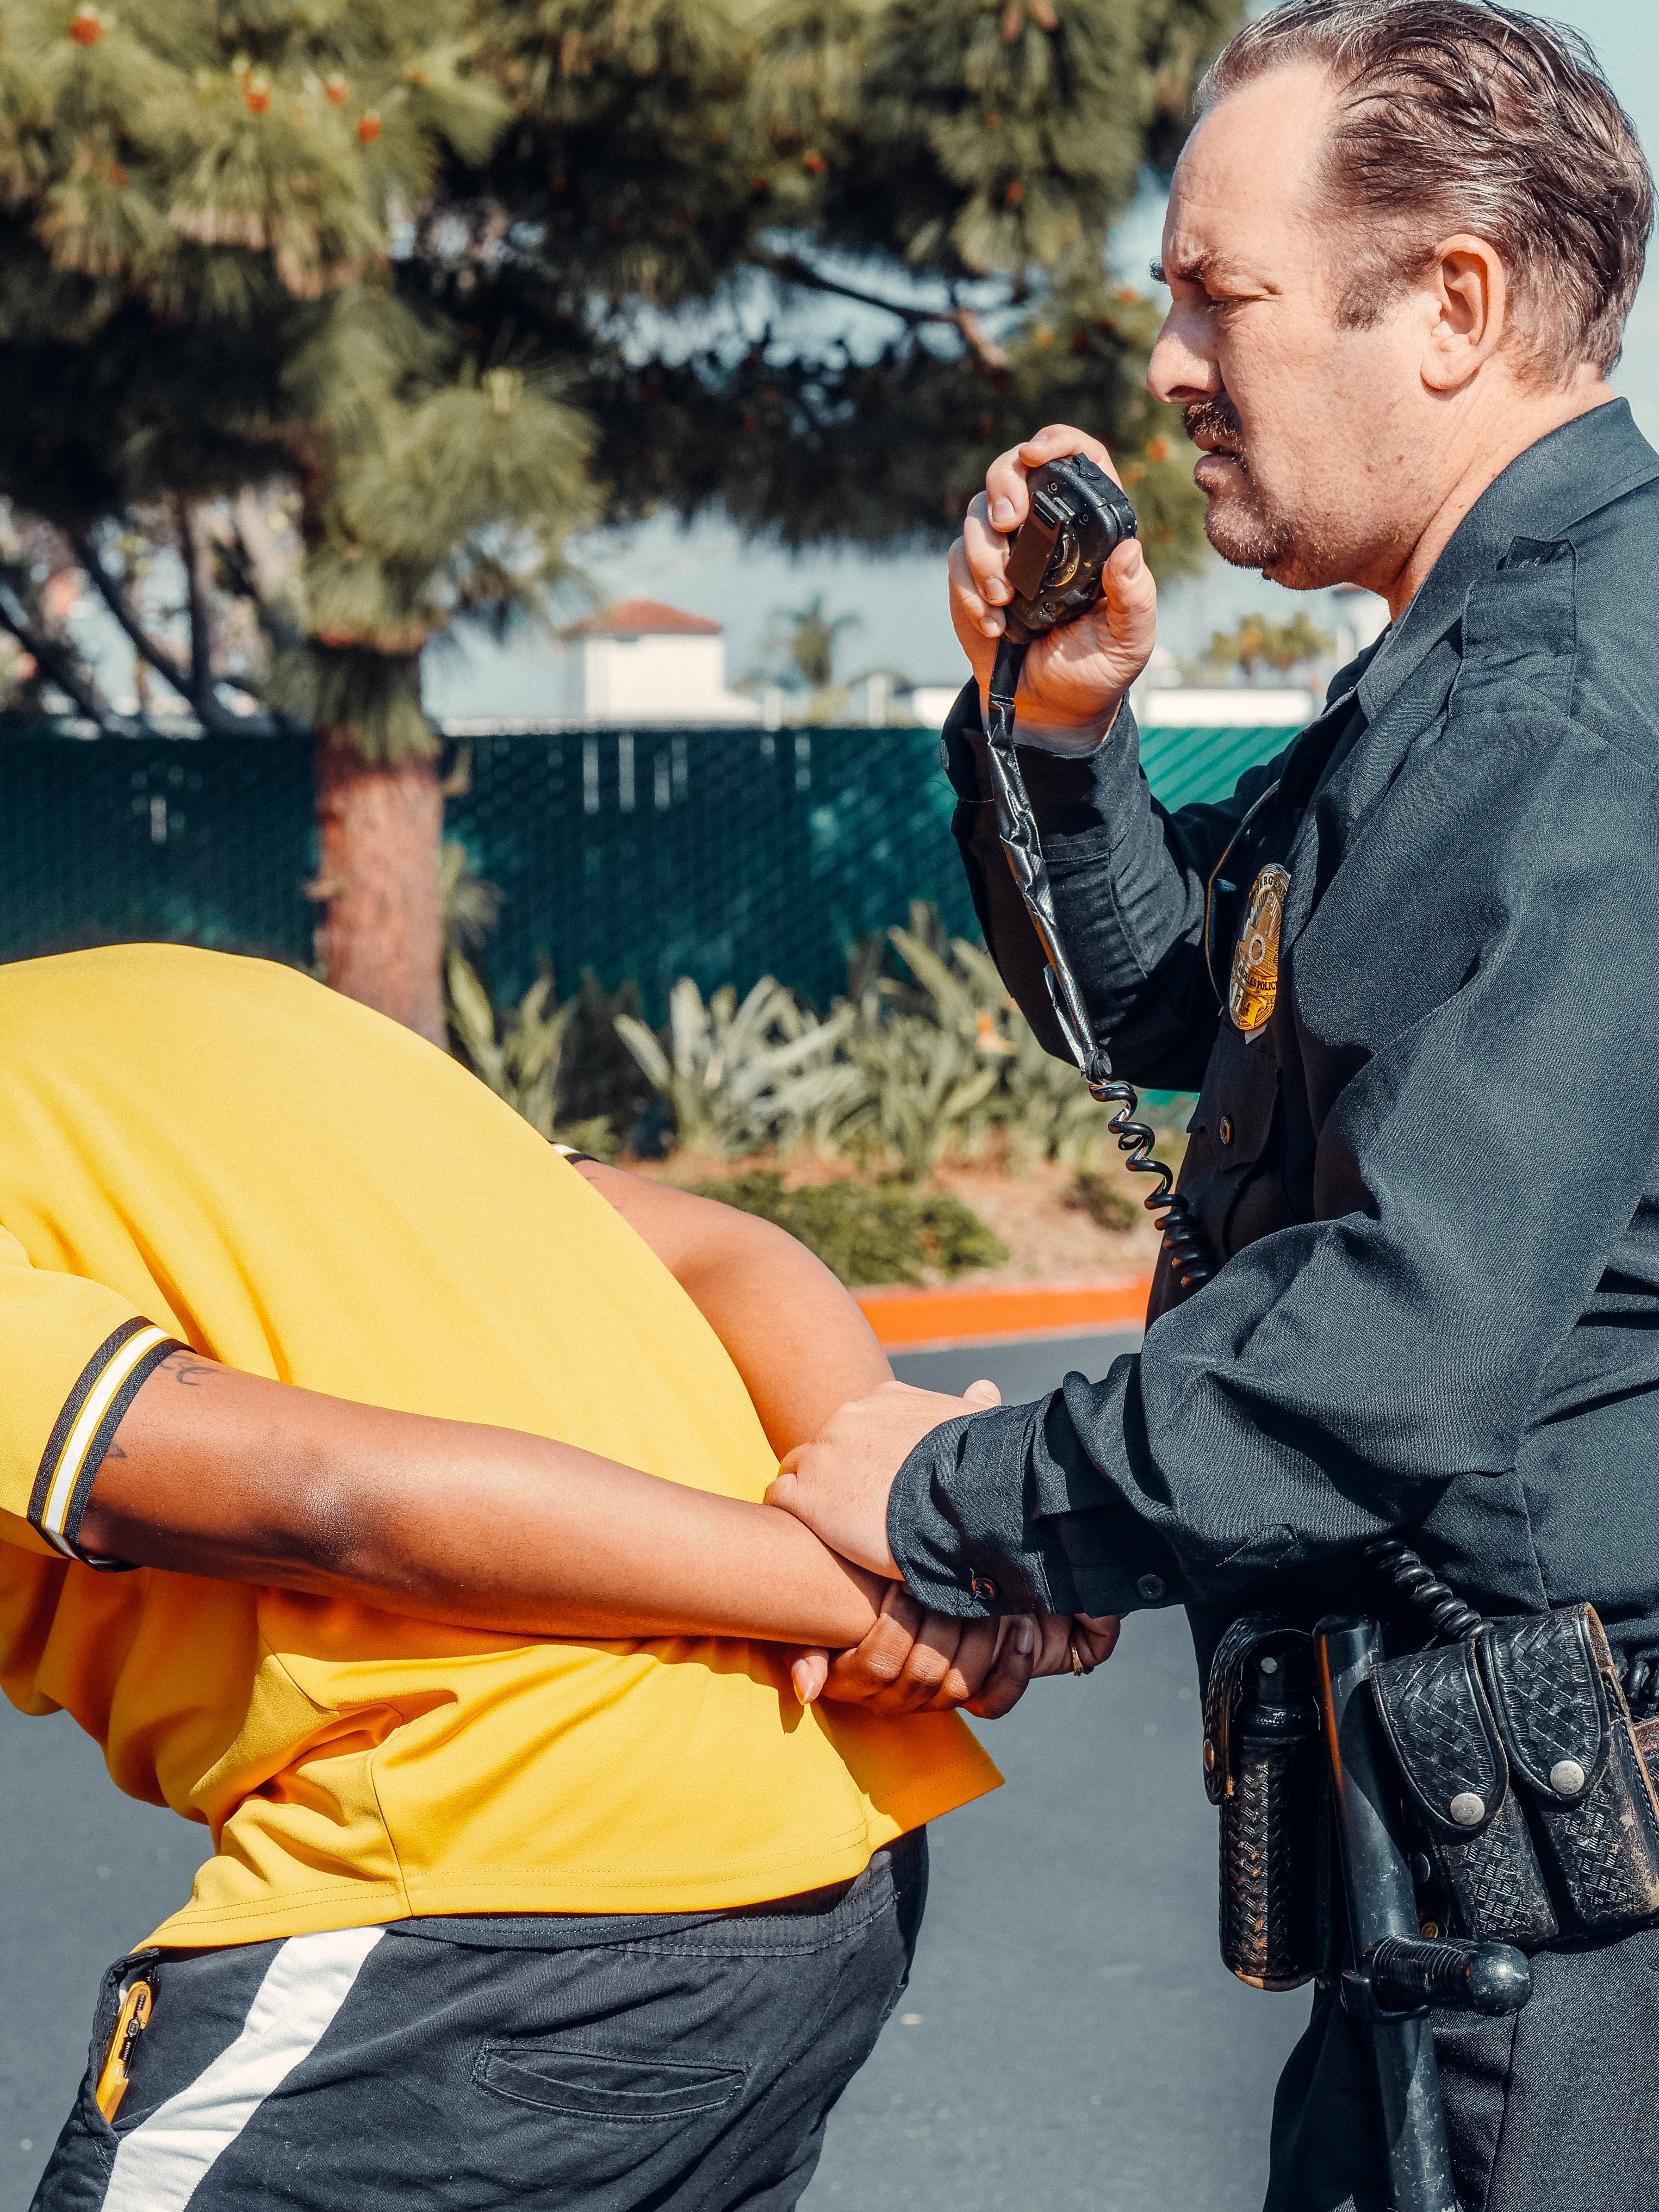 A police officer arresting a man. | Source: Pexels